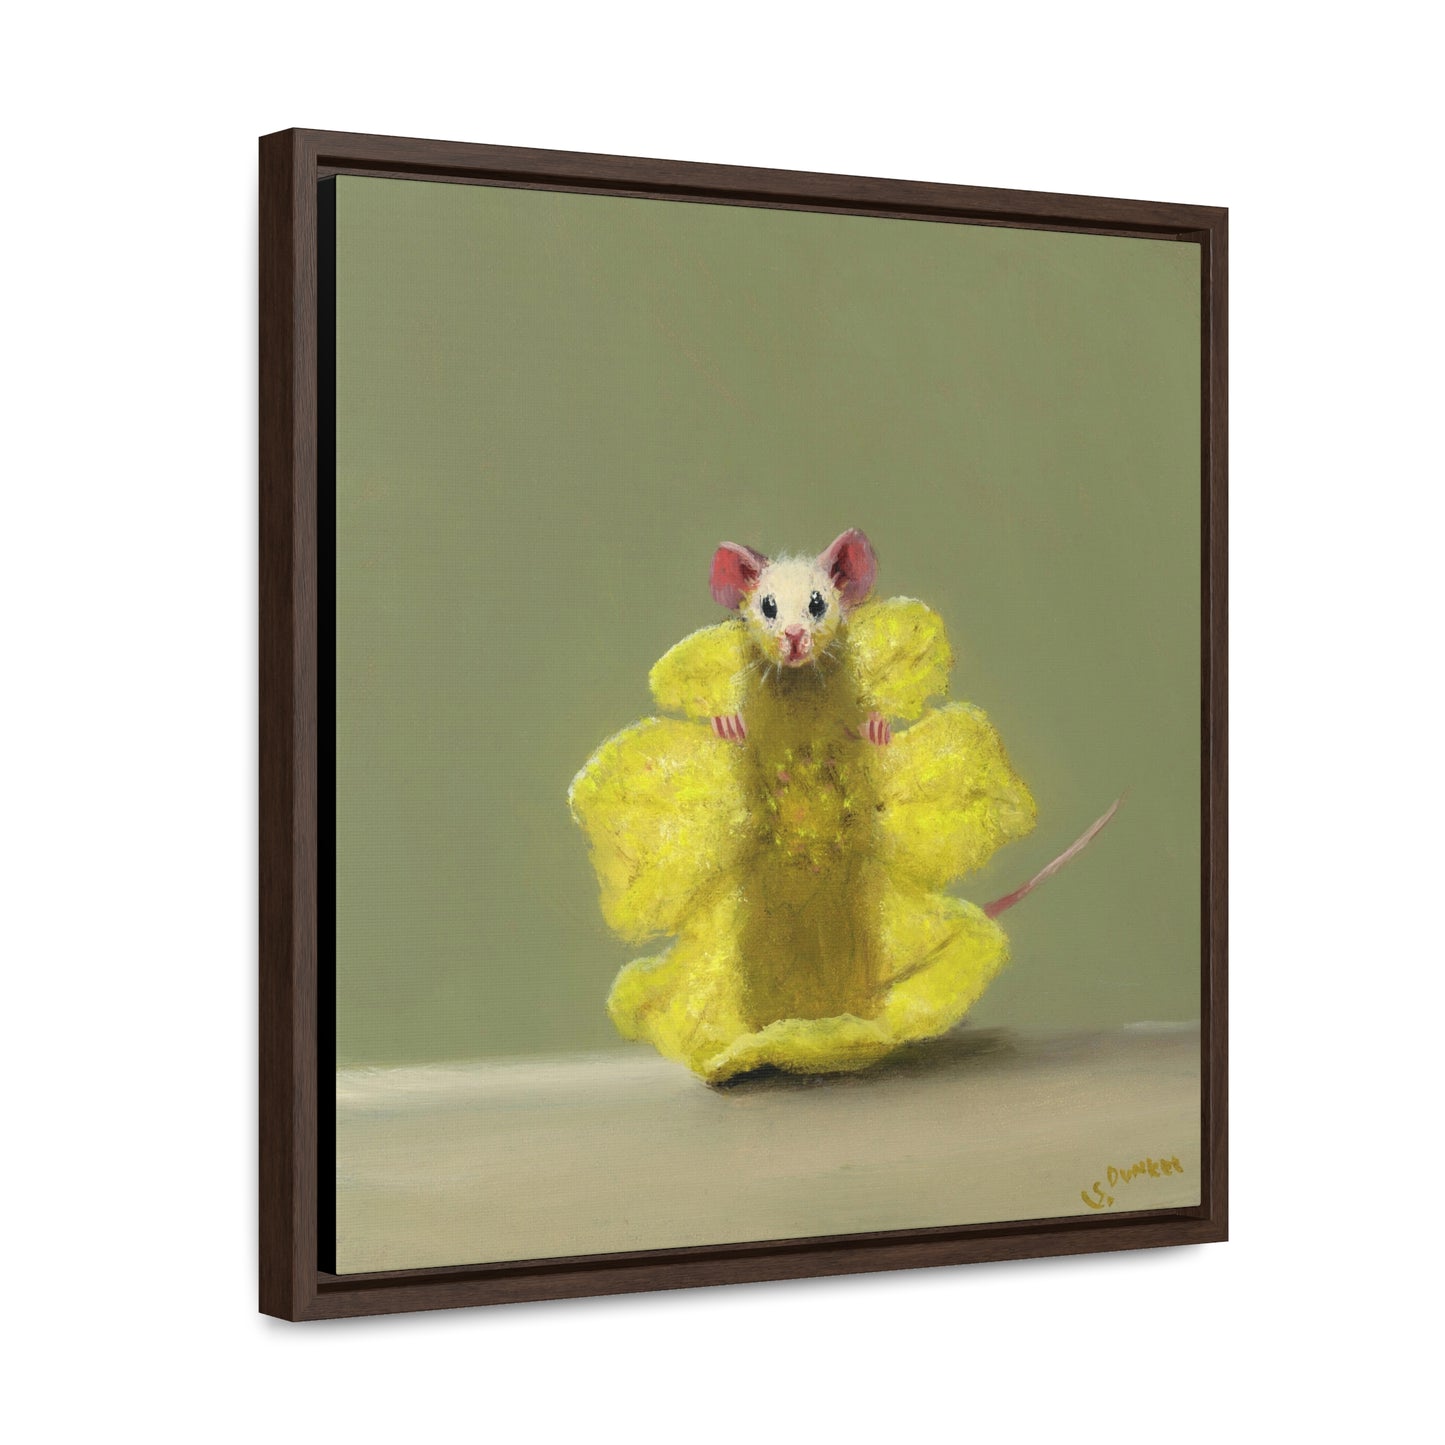 Stuart Dunkel: "Camouflage in Lemon" - Framed Canvas Reproduction